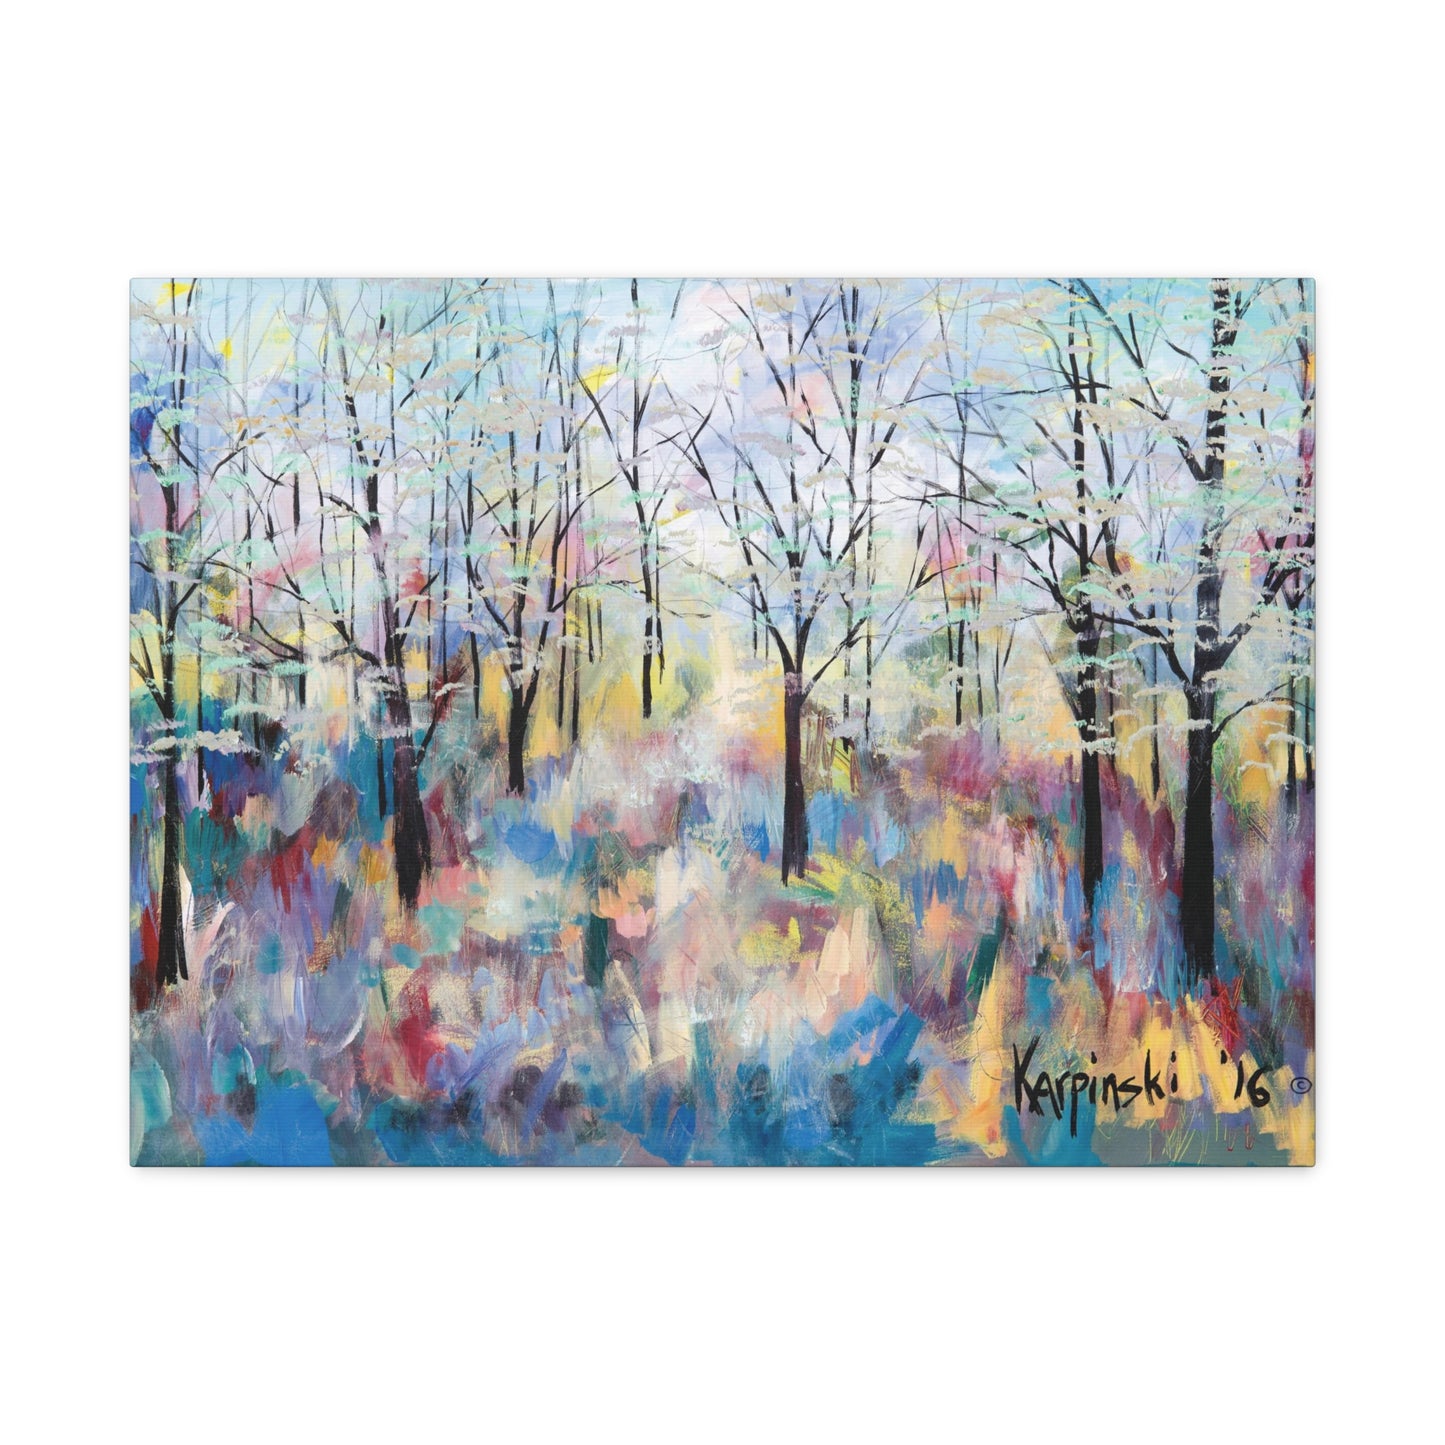 Landscape Nature Canvas Abstract Artwork Colorful Tree Art - Blue Ridge Parkway by Leslie Karpinski